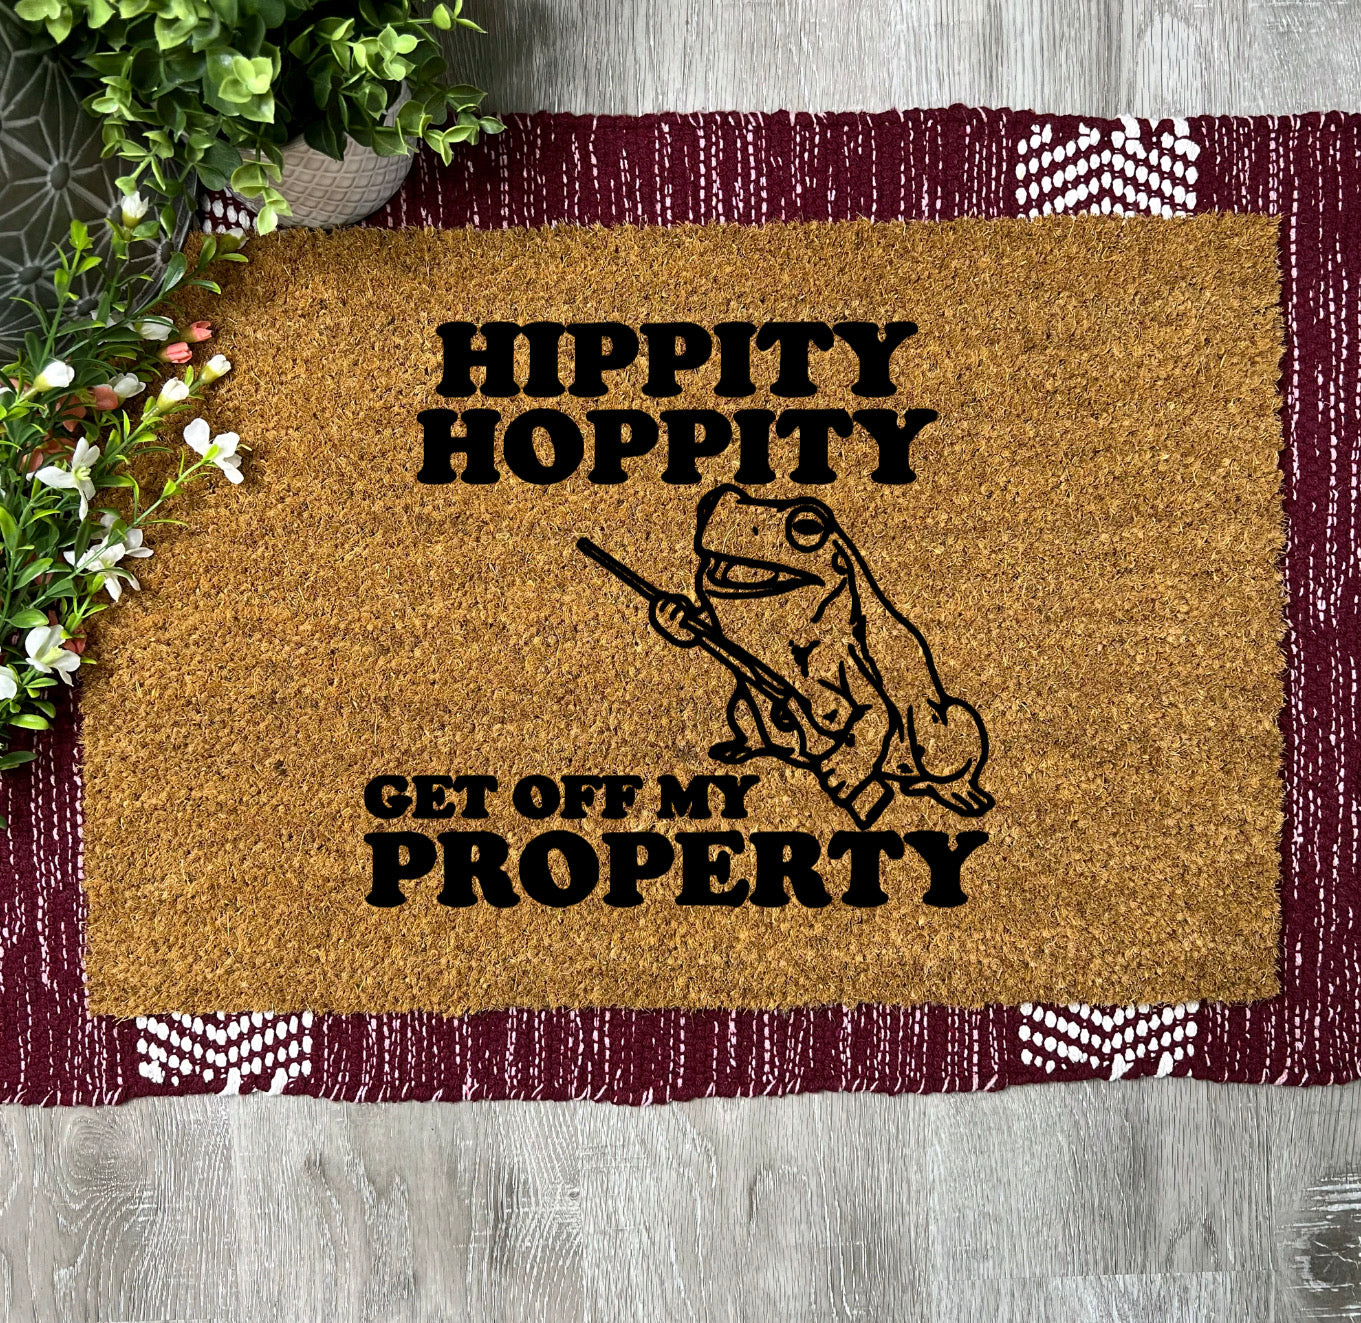 Hippity Hoppity